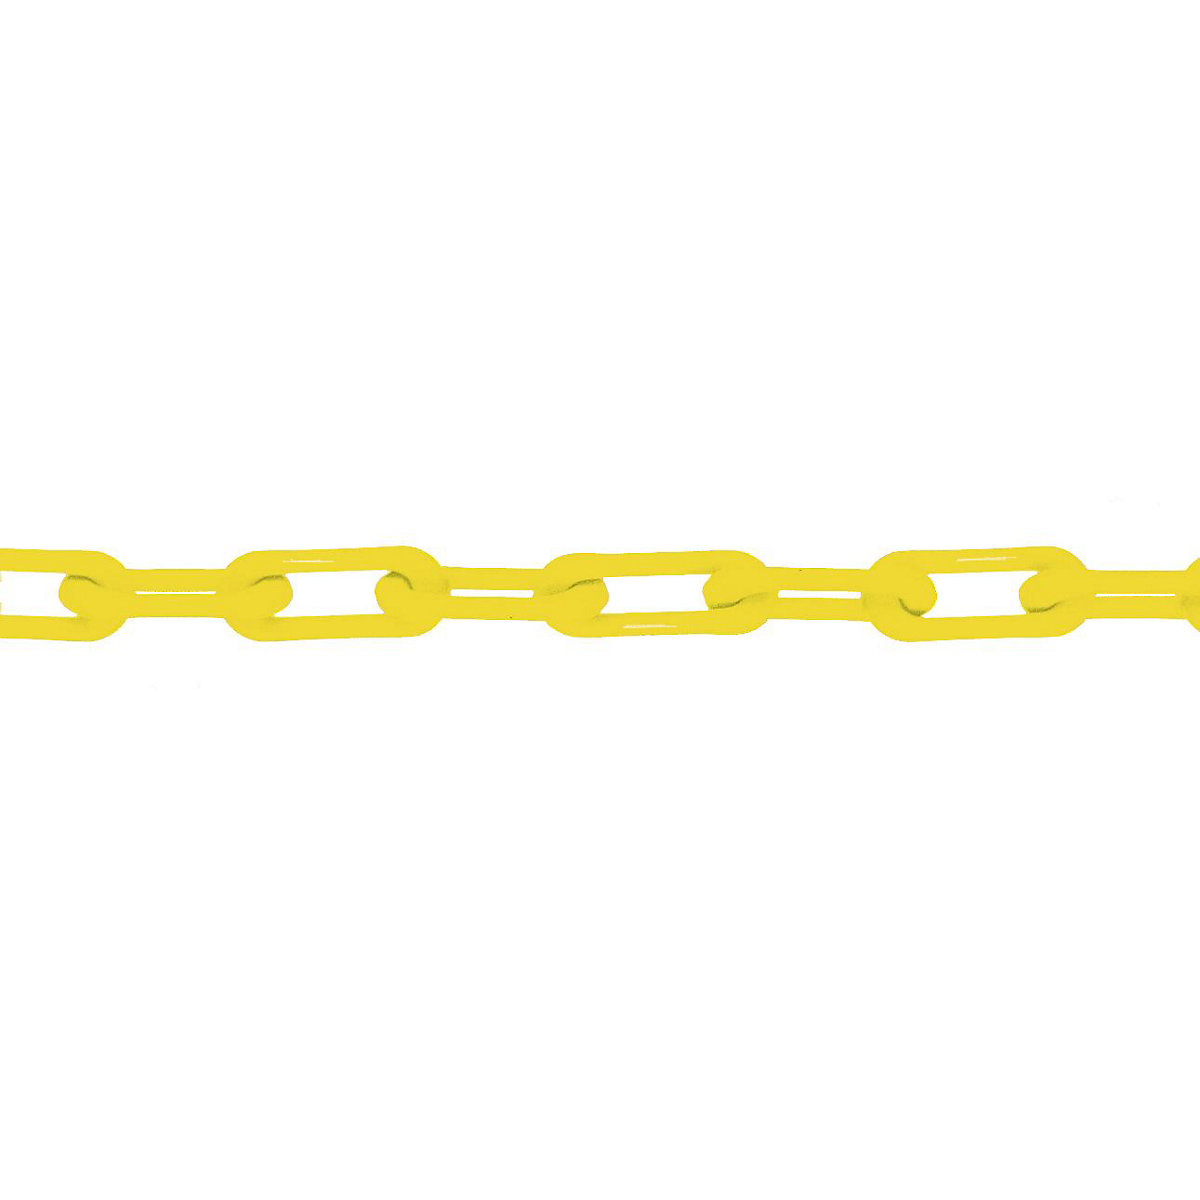 Nylon chain, MNK quality standard 6, band length 50 m, yellow-5